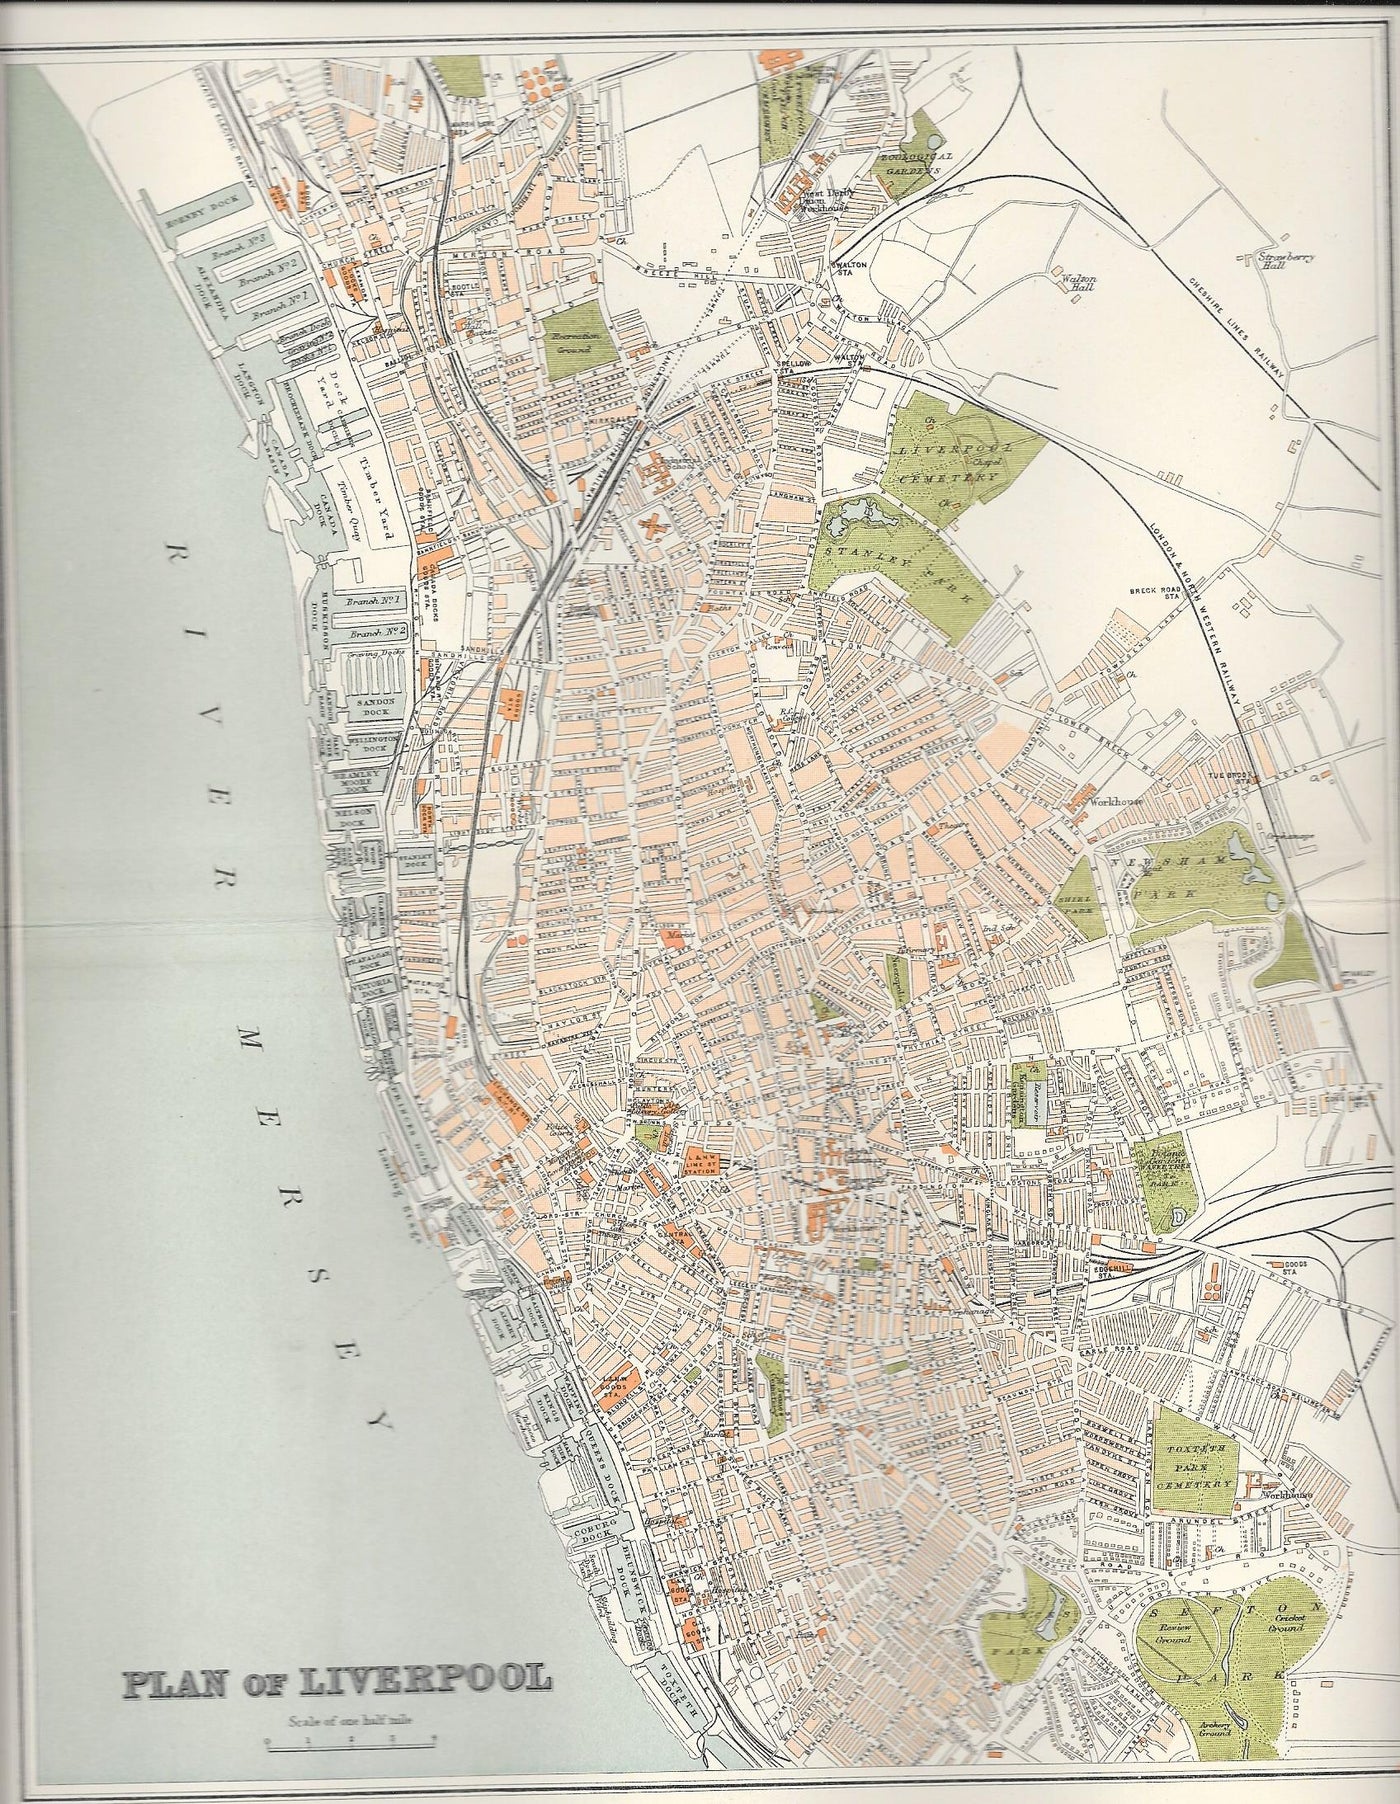 Liverpool antique map published 1895